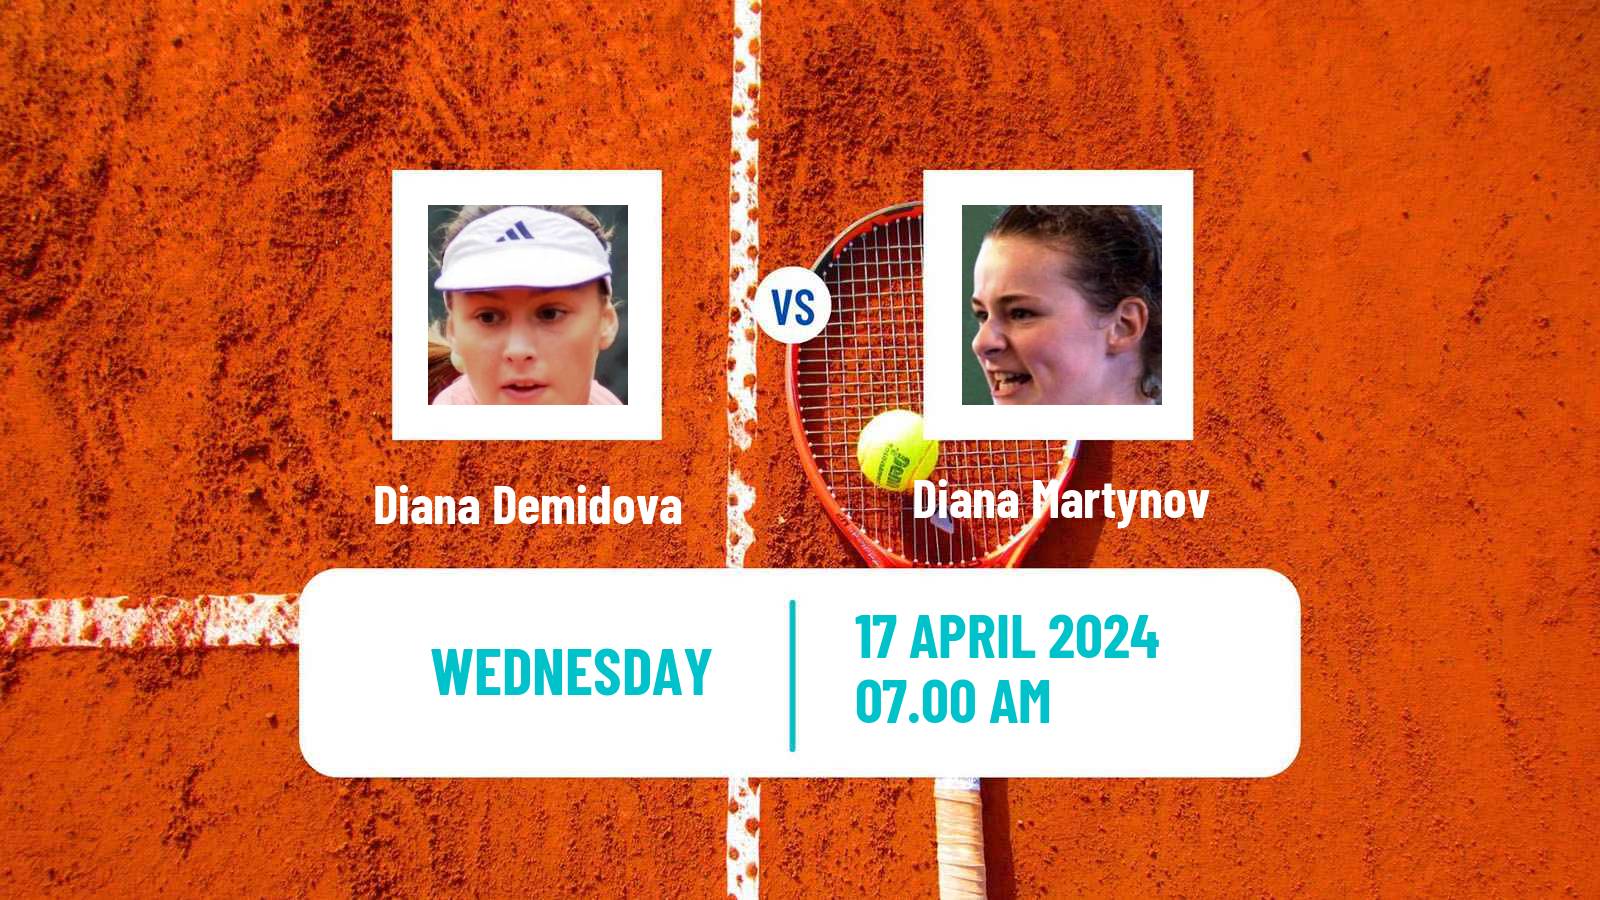 Tennis ITF W35 Hammamet 5 Women Diana Demidova - Diana Martynov